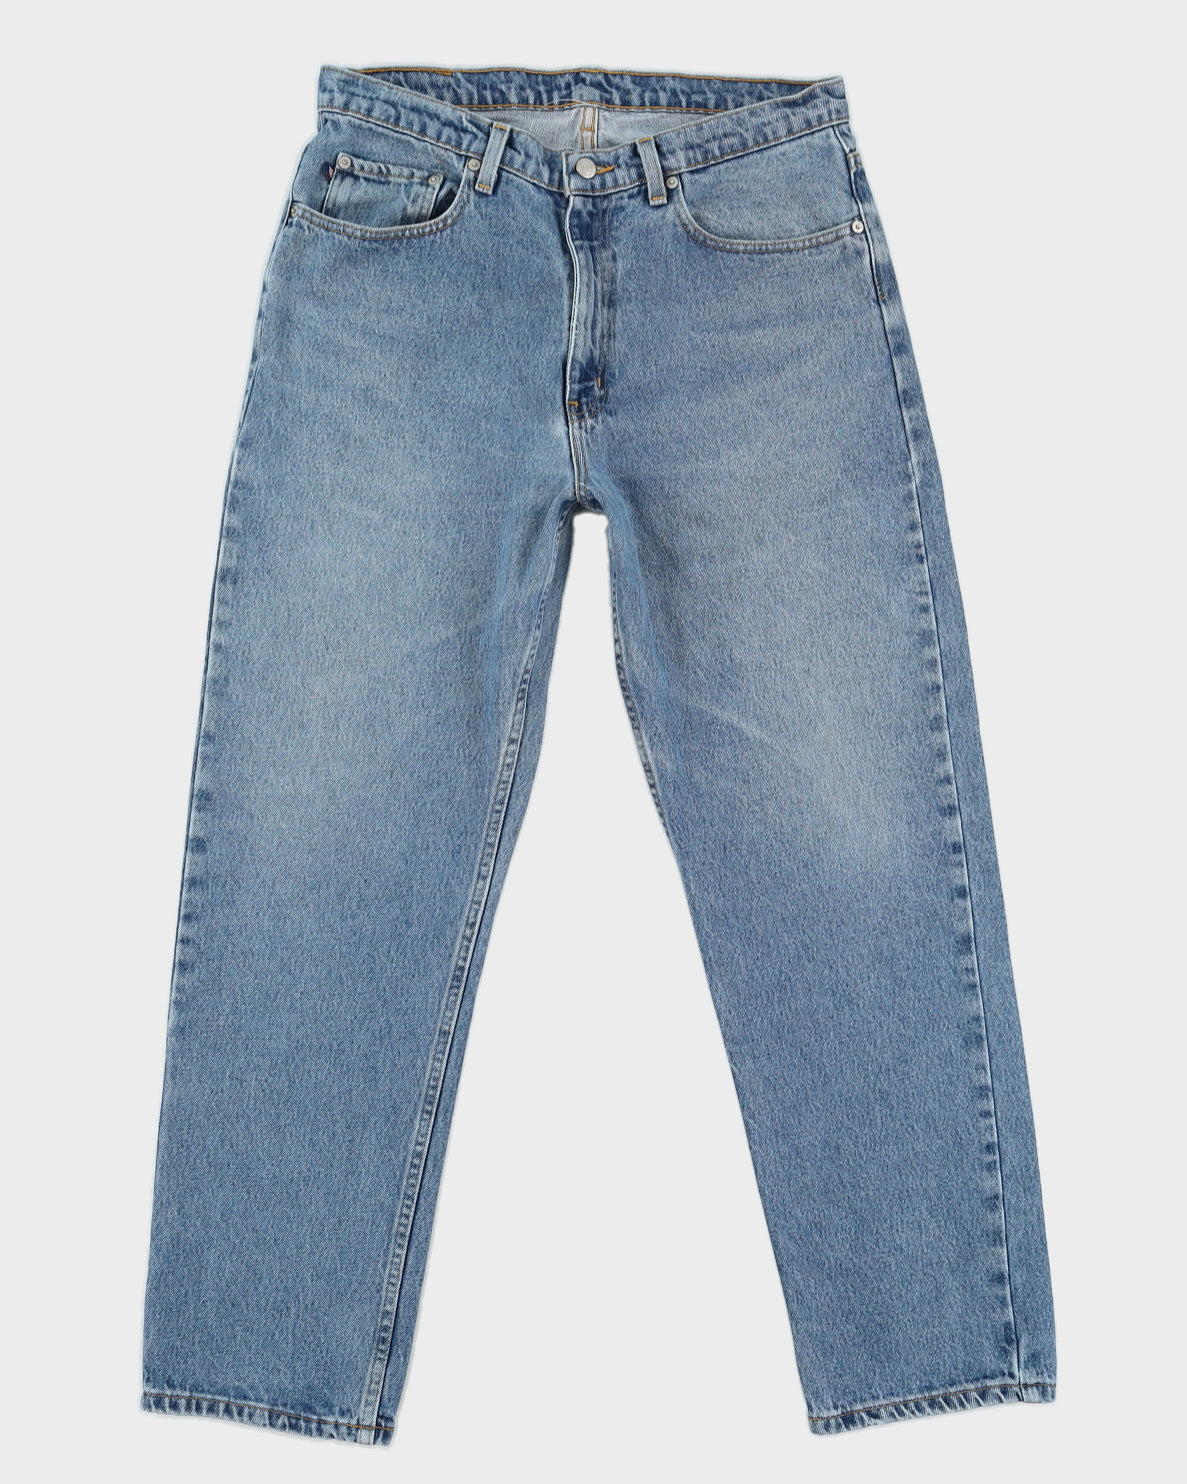 Vintage 90s Polo Jeans Co Medium Wash Jeans - W34 L30